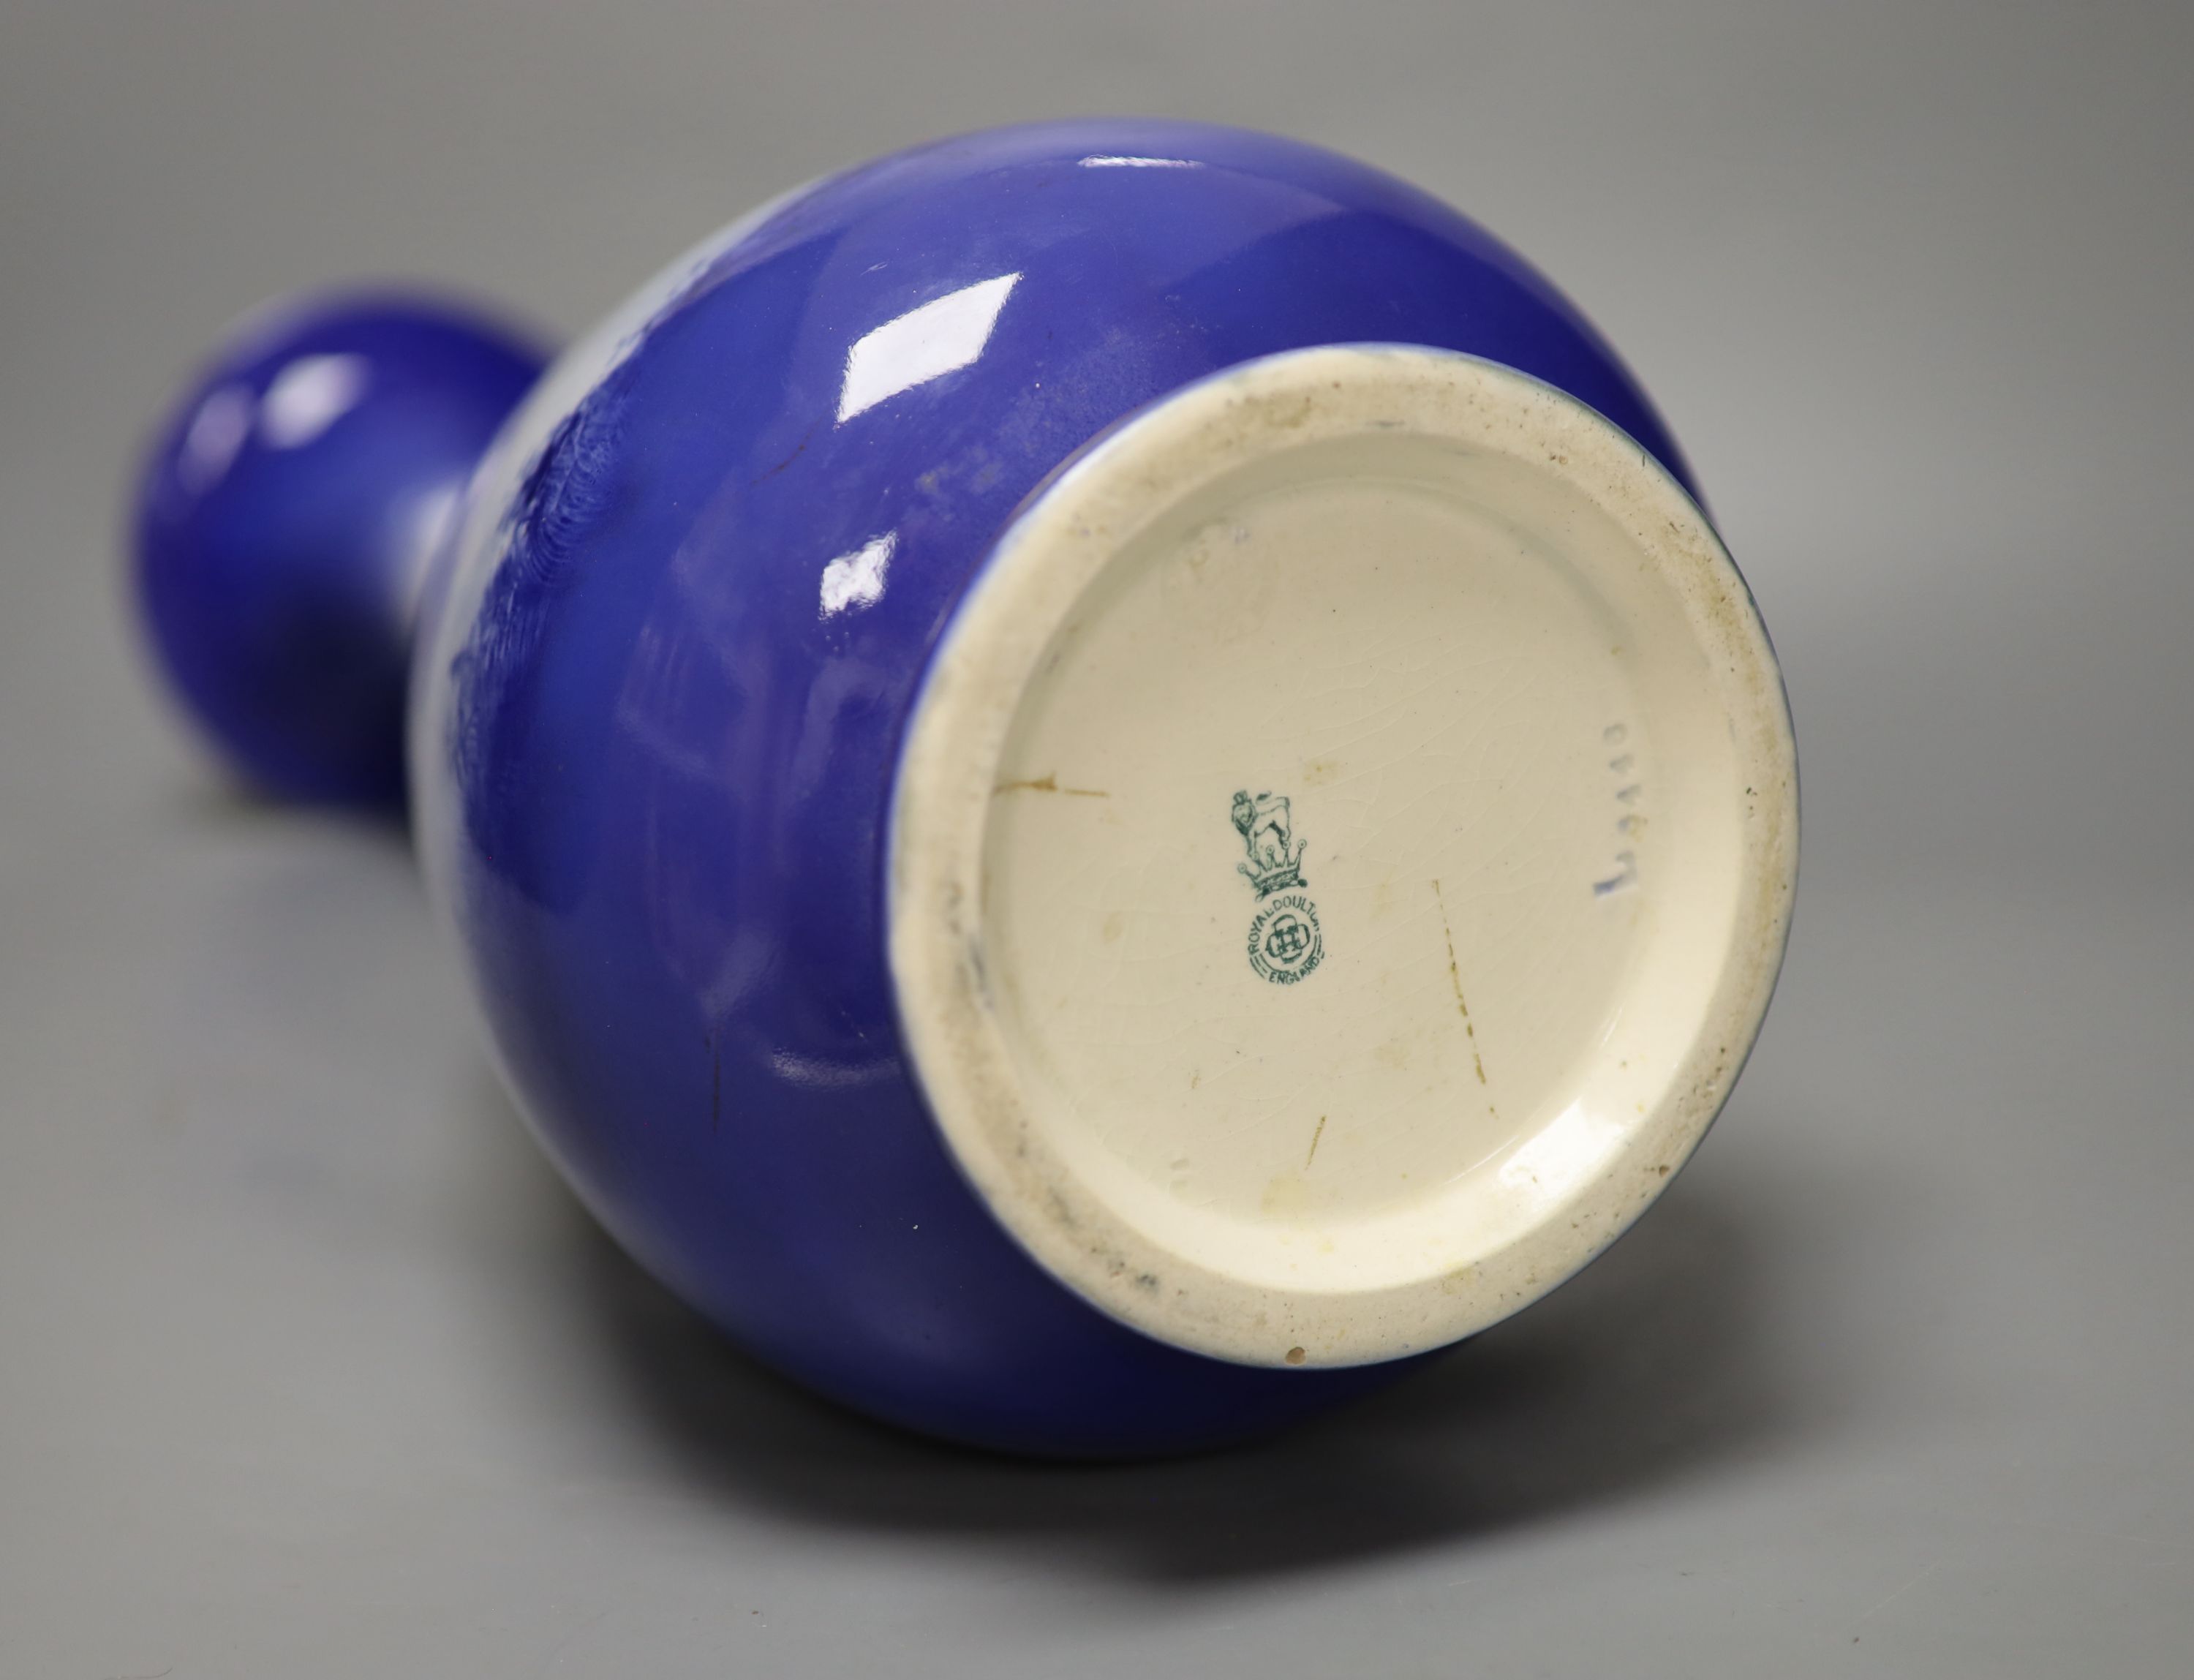 A large Royal Doulton Blue Children bottle vase, height 47cm